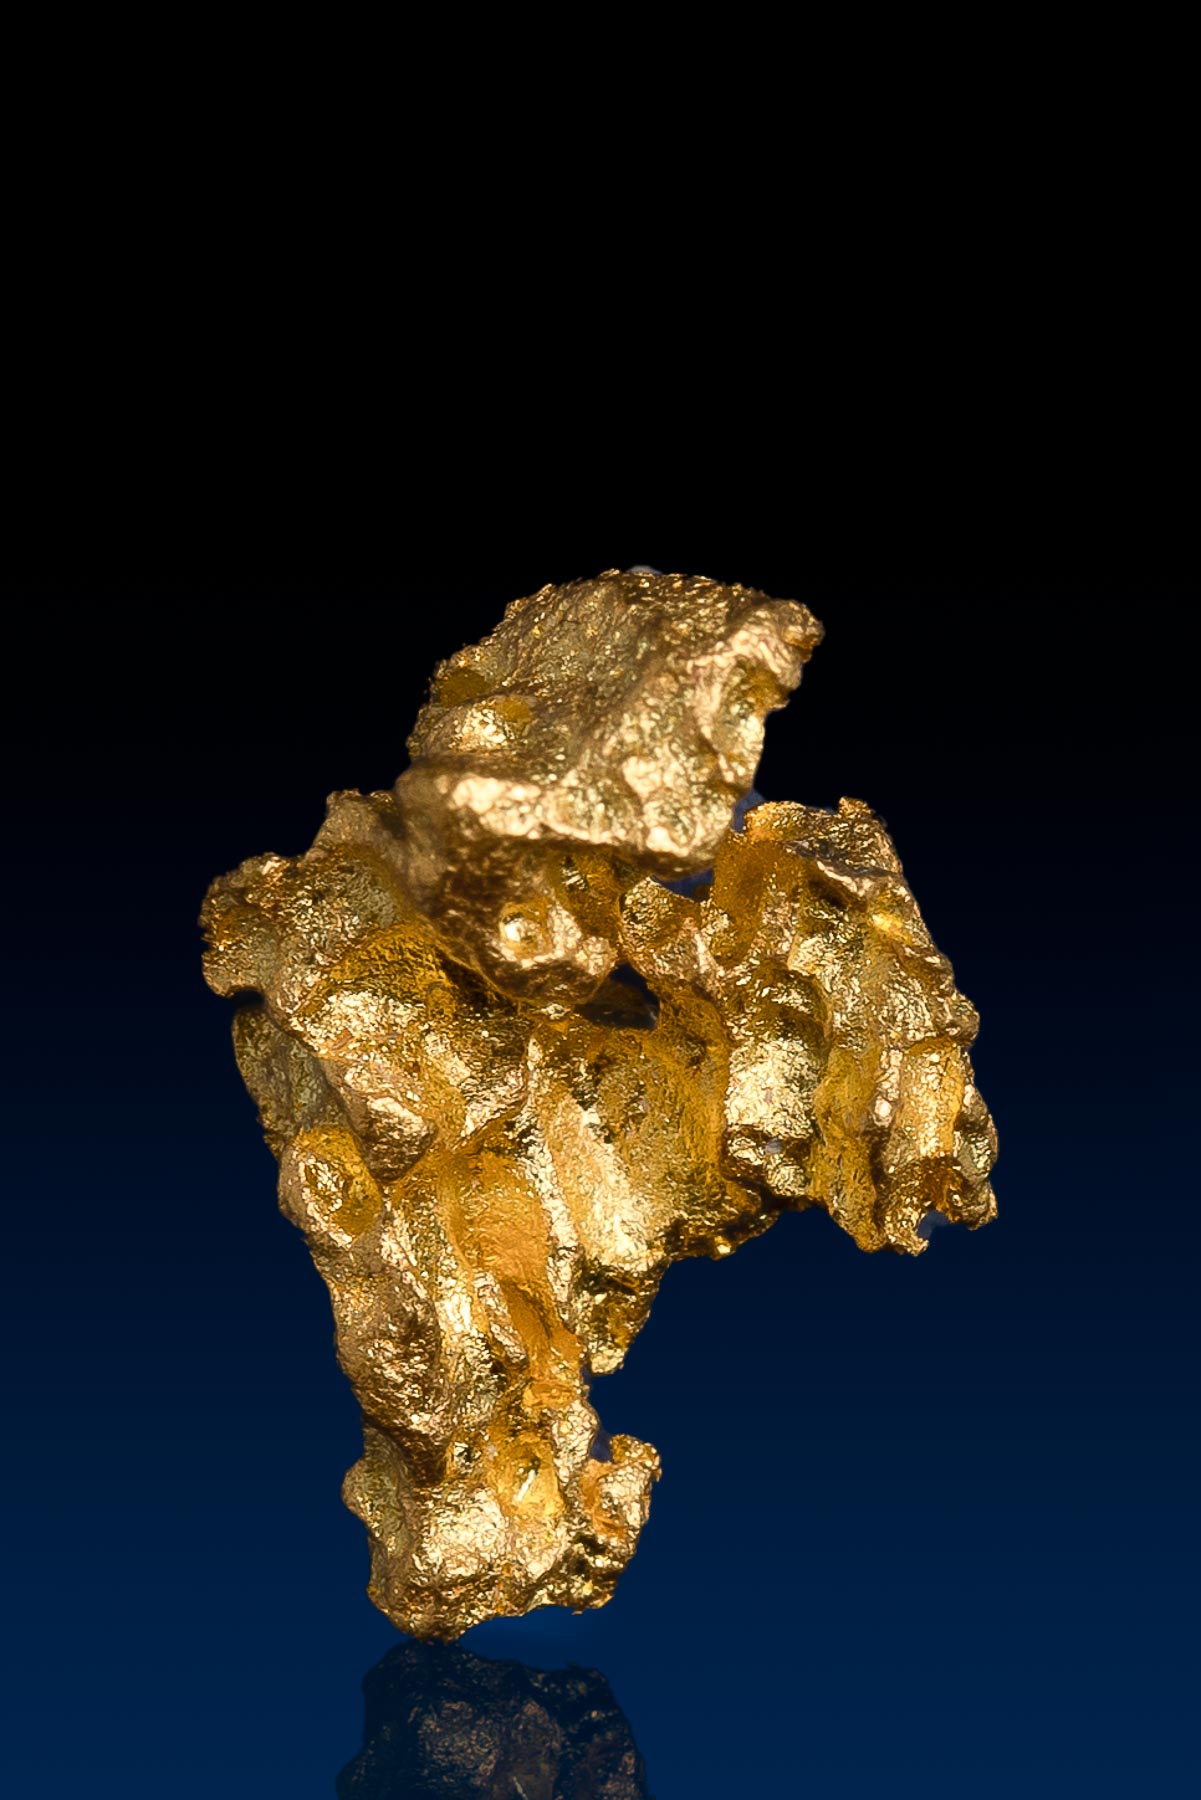 "Bird" Australian Natural Gold Nugget - 2.13 grams